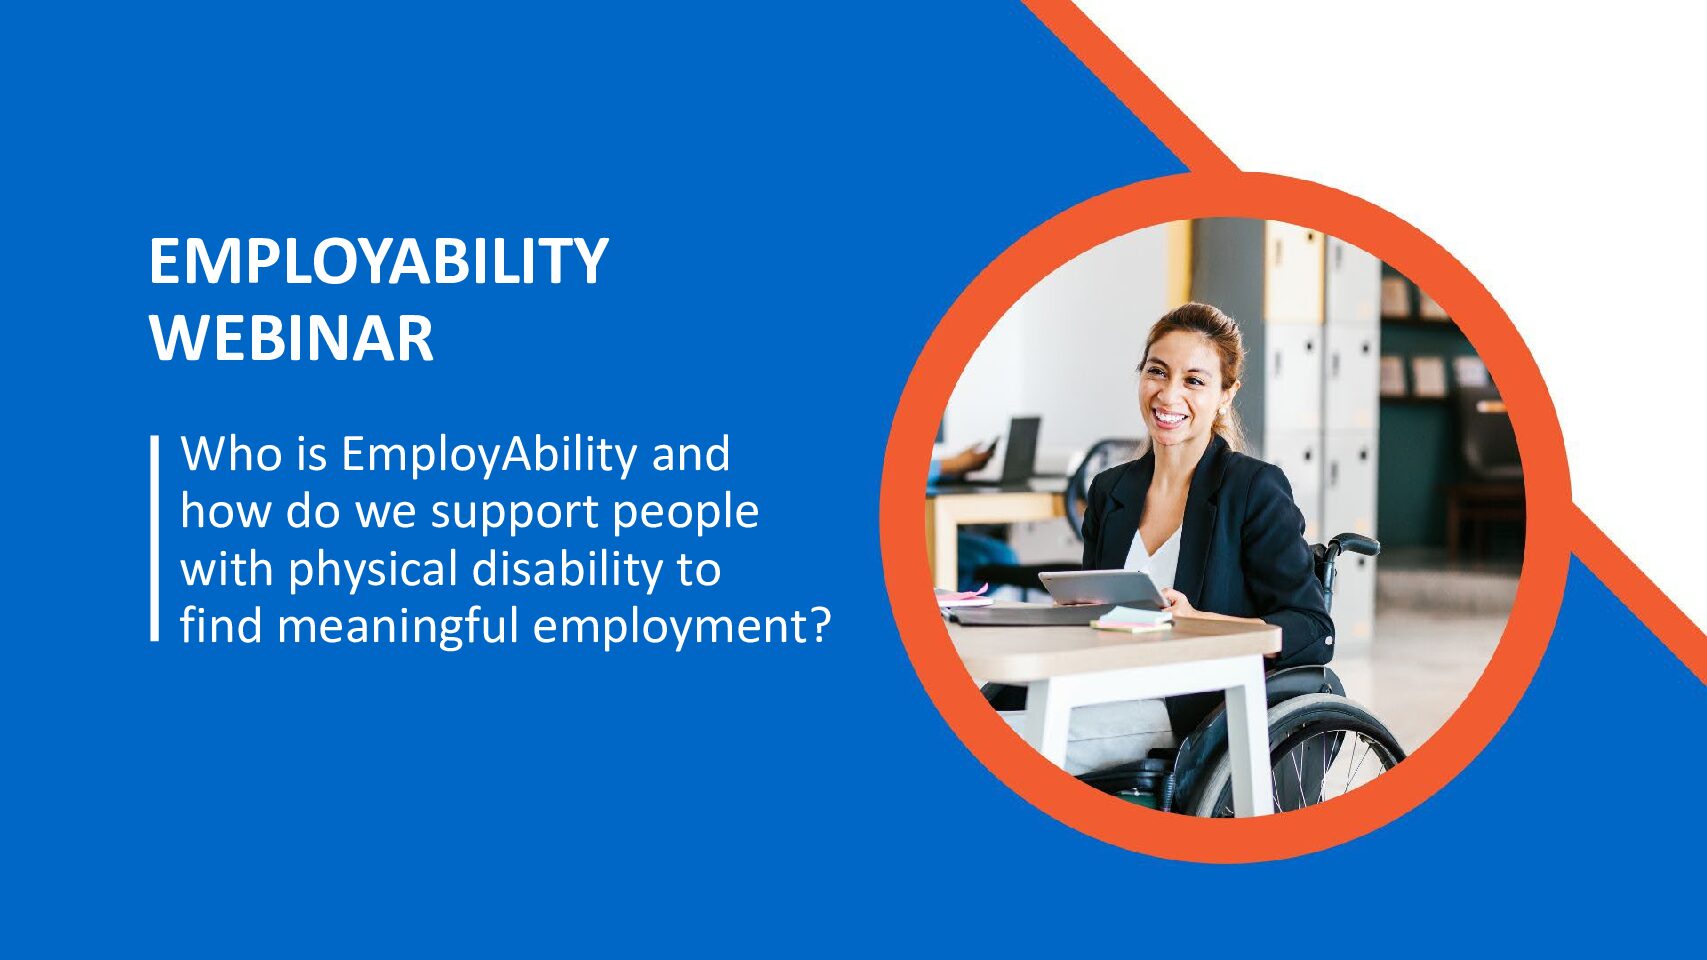 Who is EmployAbility?